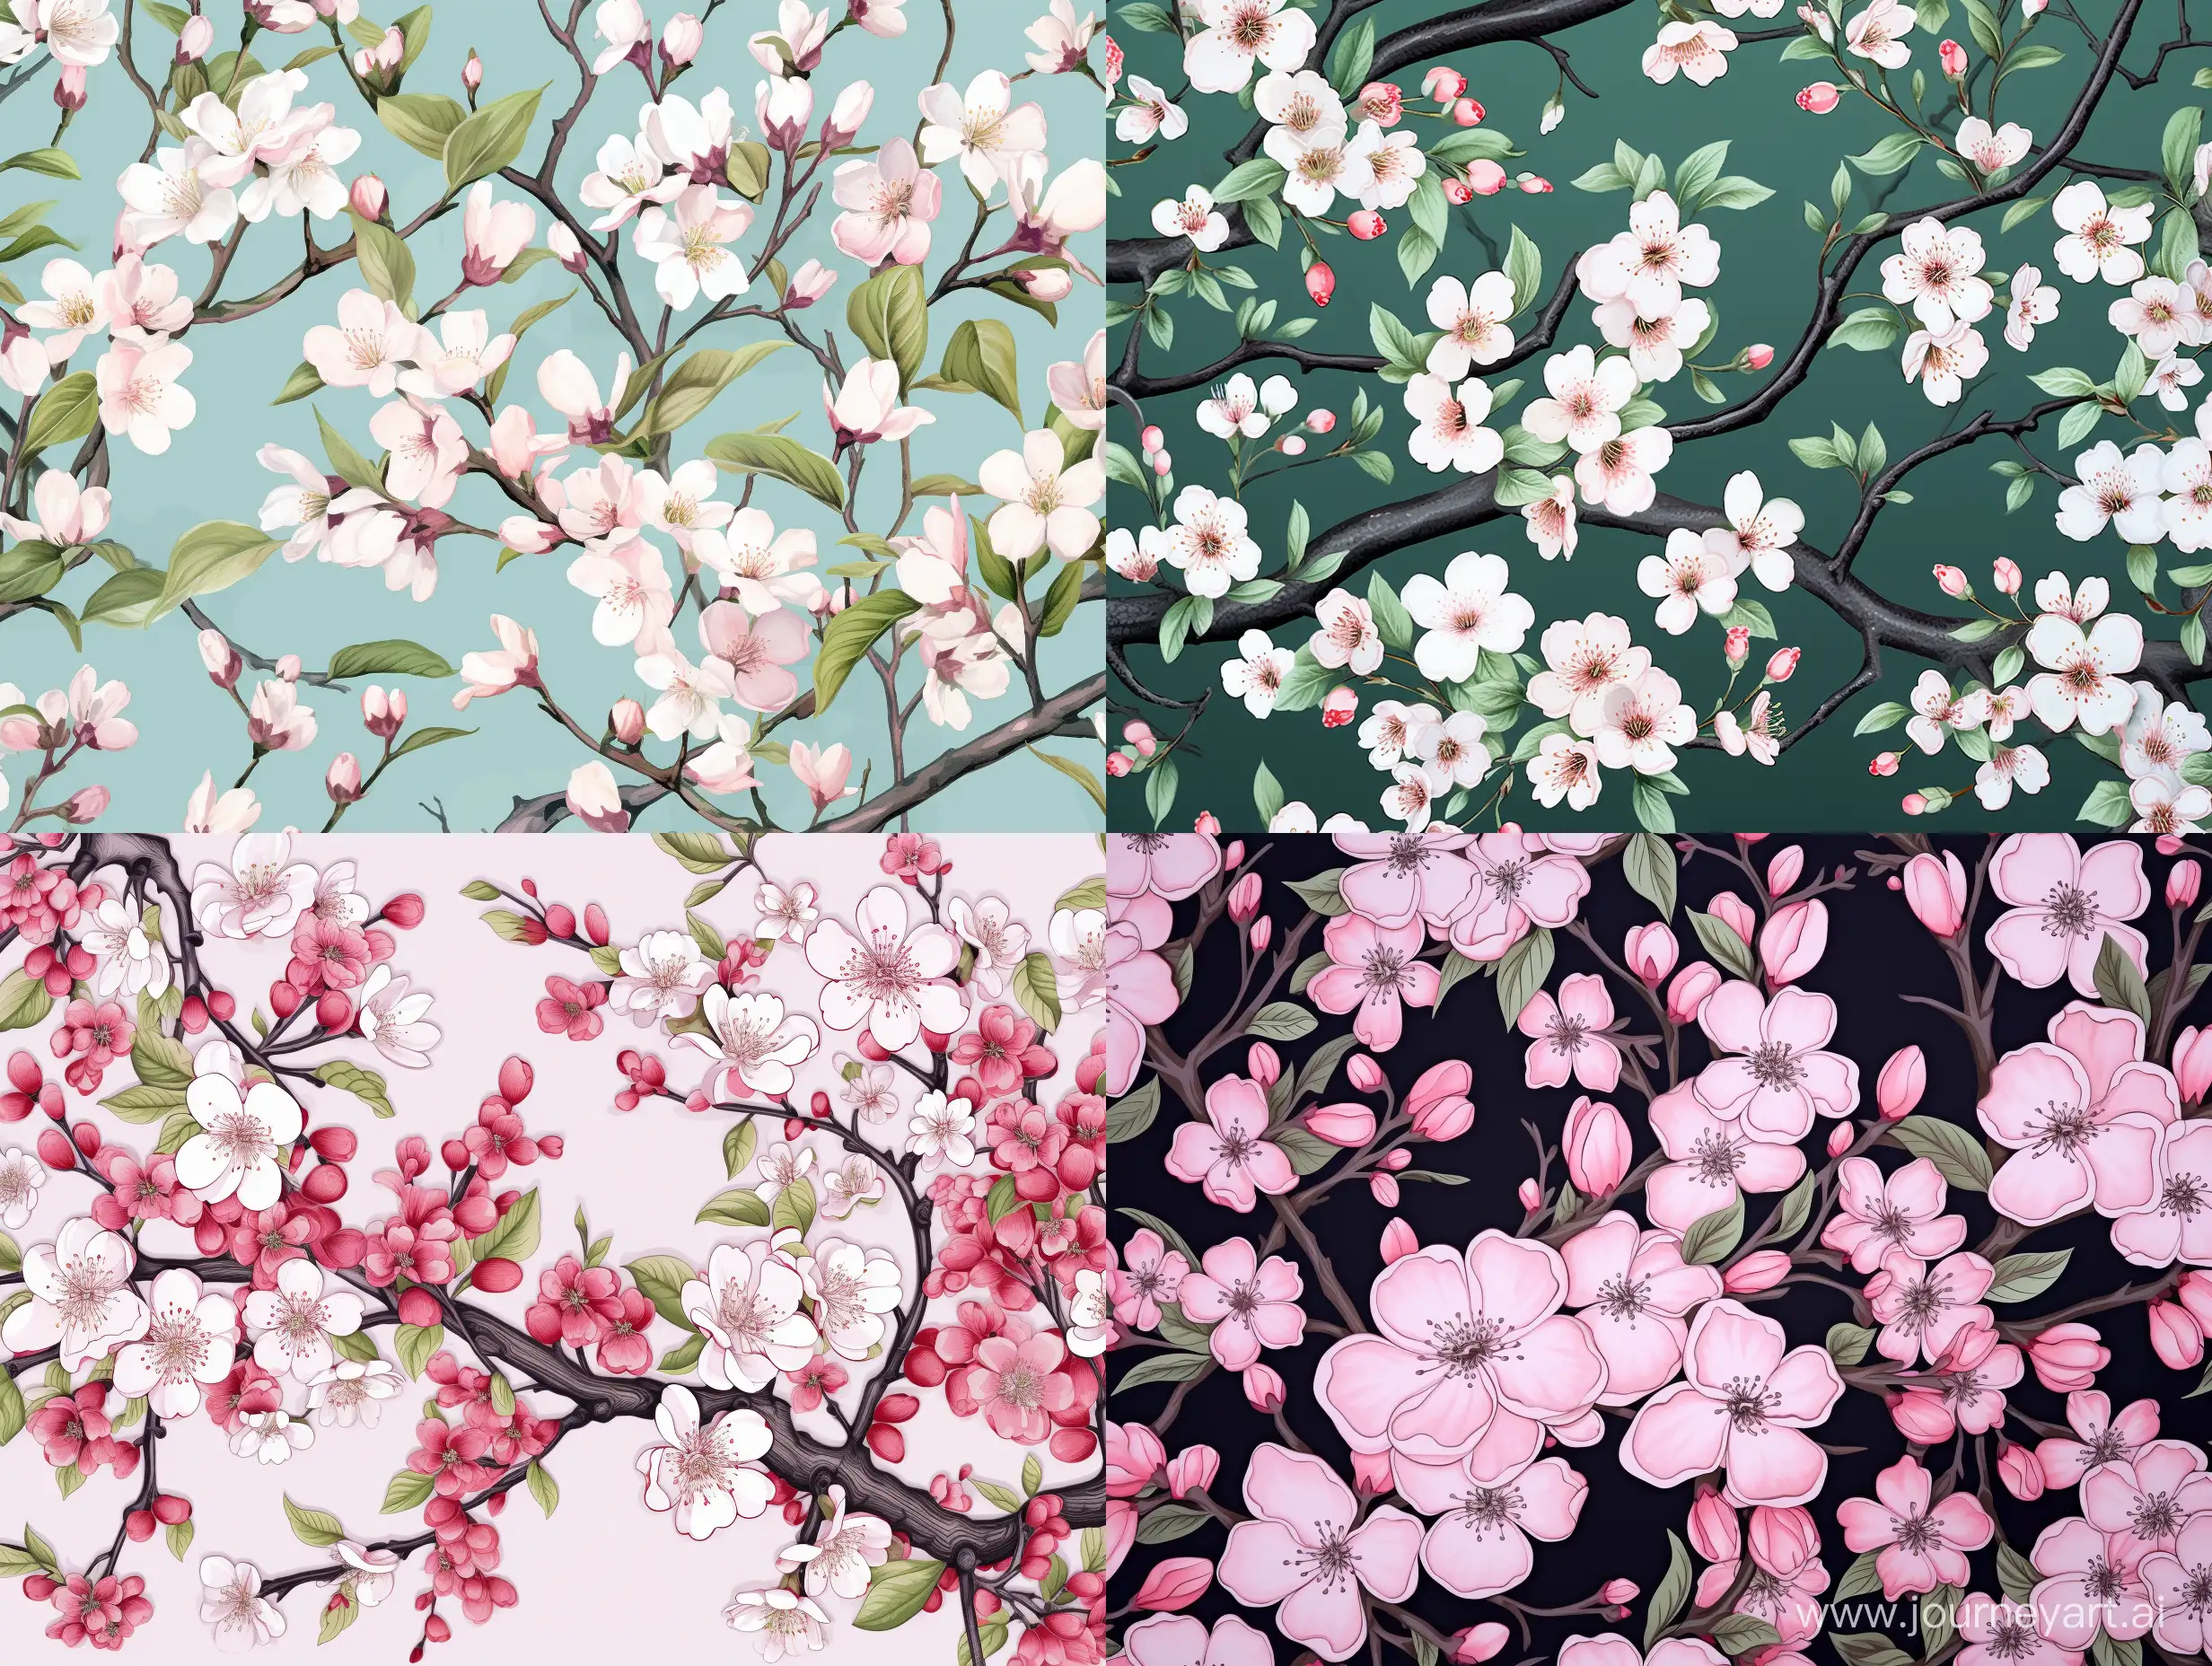 Rectangular ornamental pattern of apple blossoms,Victor Ngai style, watercolor, flat illustration, decorative